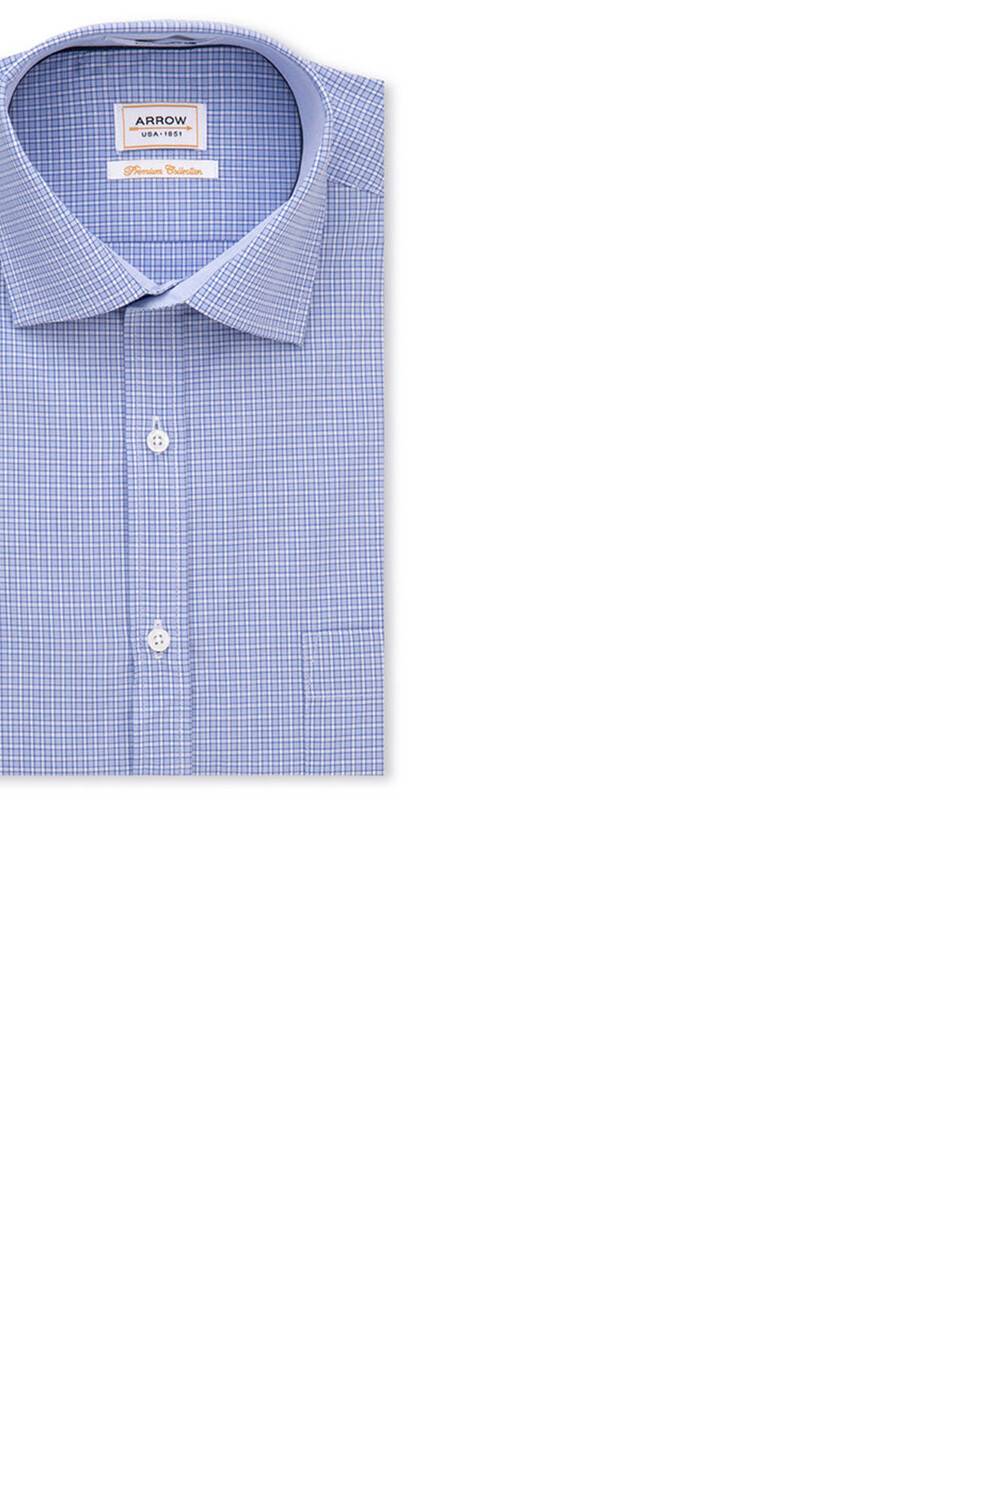 ARROW - Pack Camisa -Corbata Formal